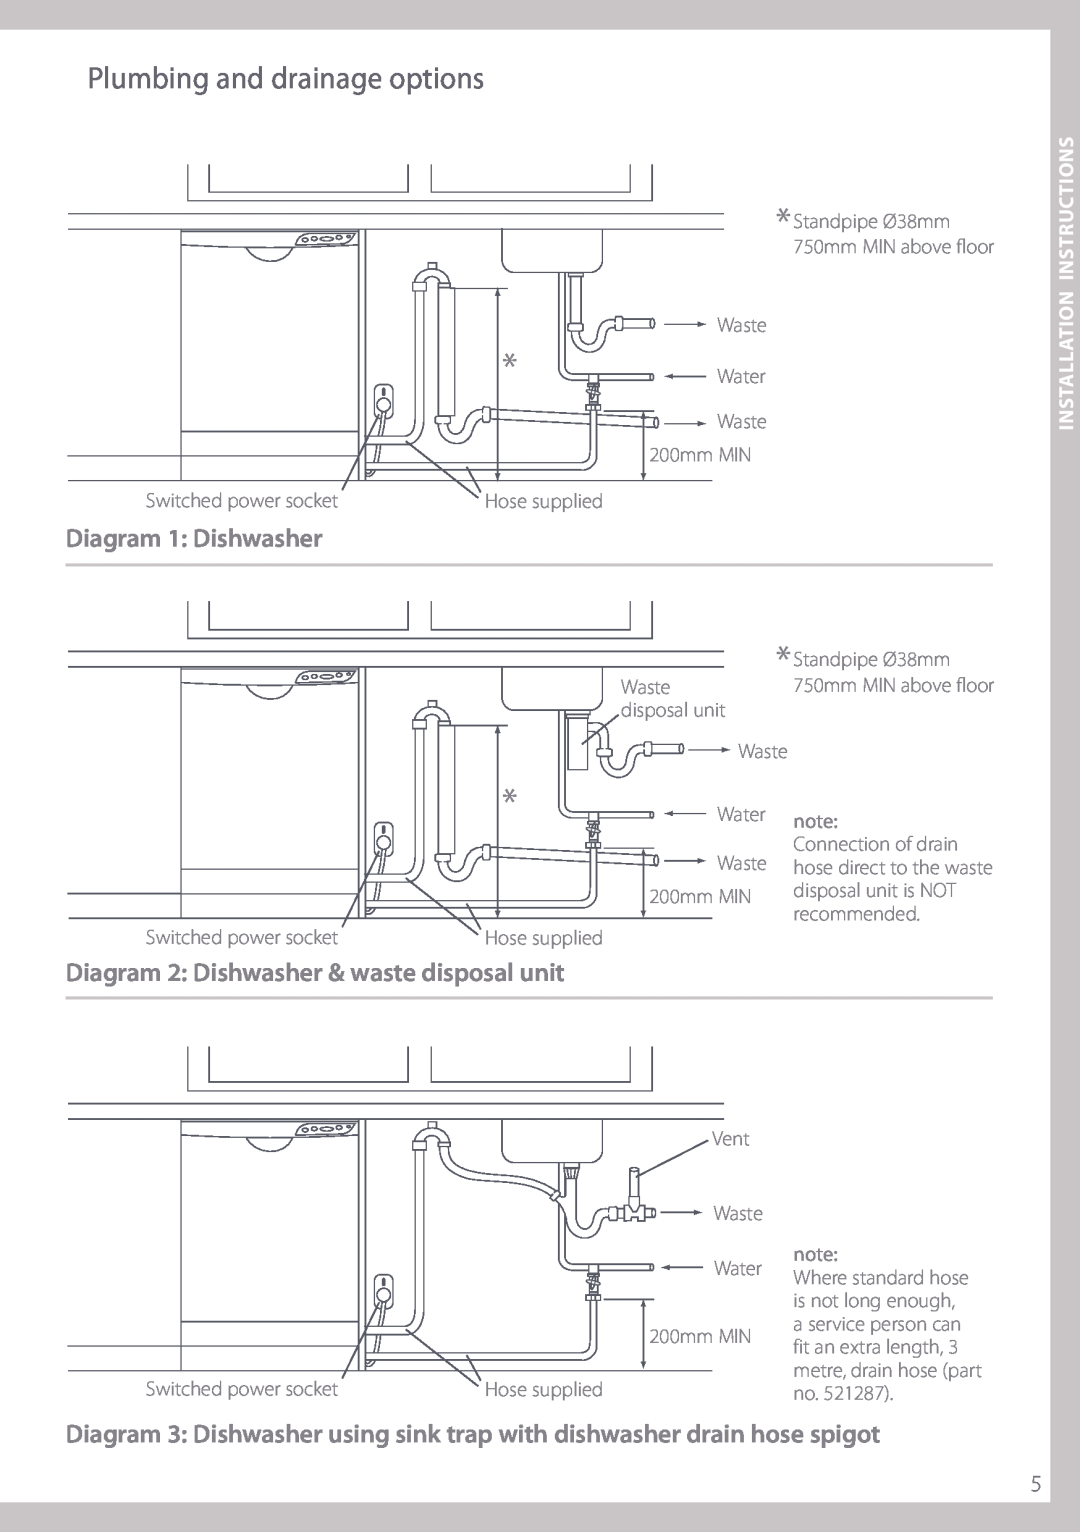 Fisher & Paykel DW820 Plumbing and drainage options, Diagram 1 Dishwasher, Diagram 2 Dishwasher & waste disposal unit 